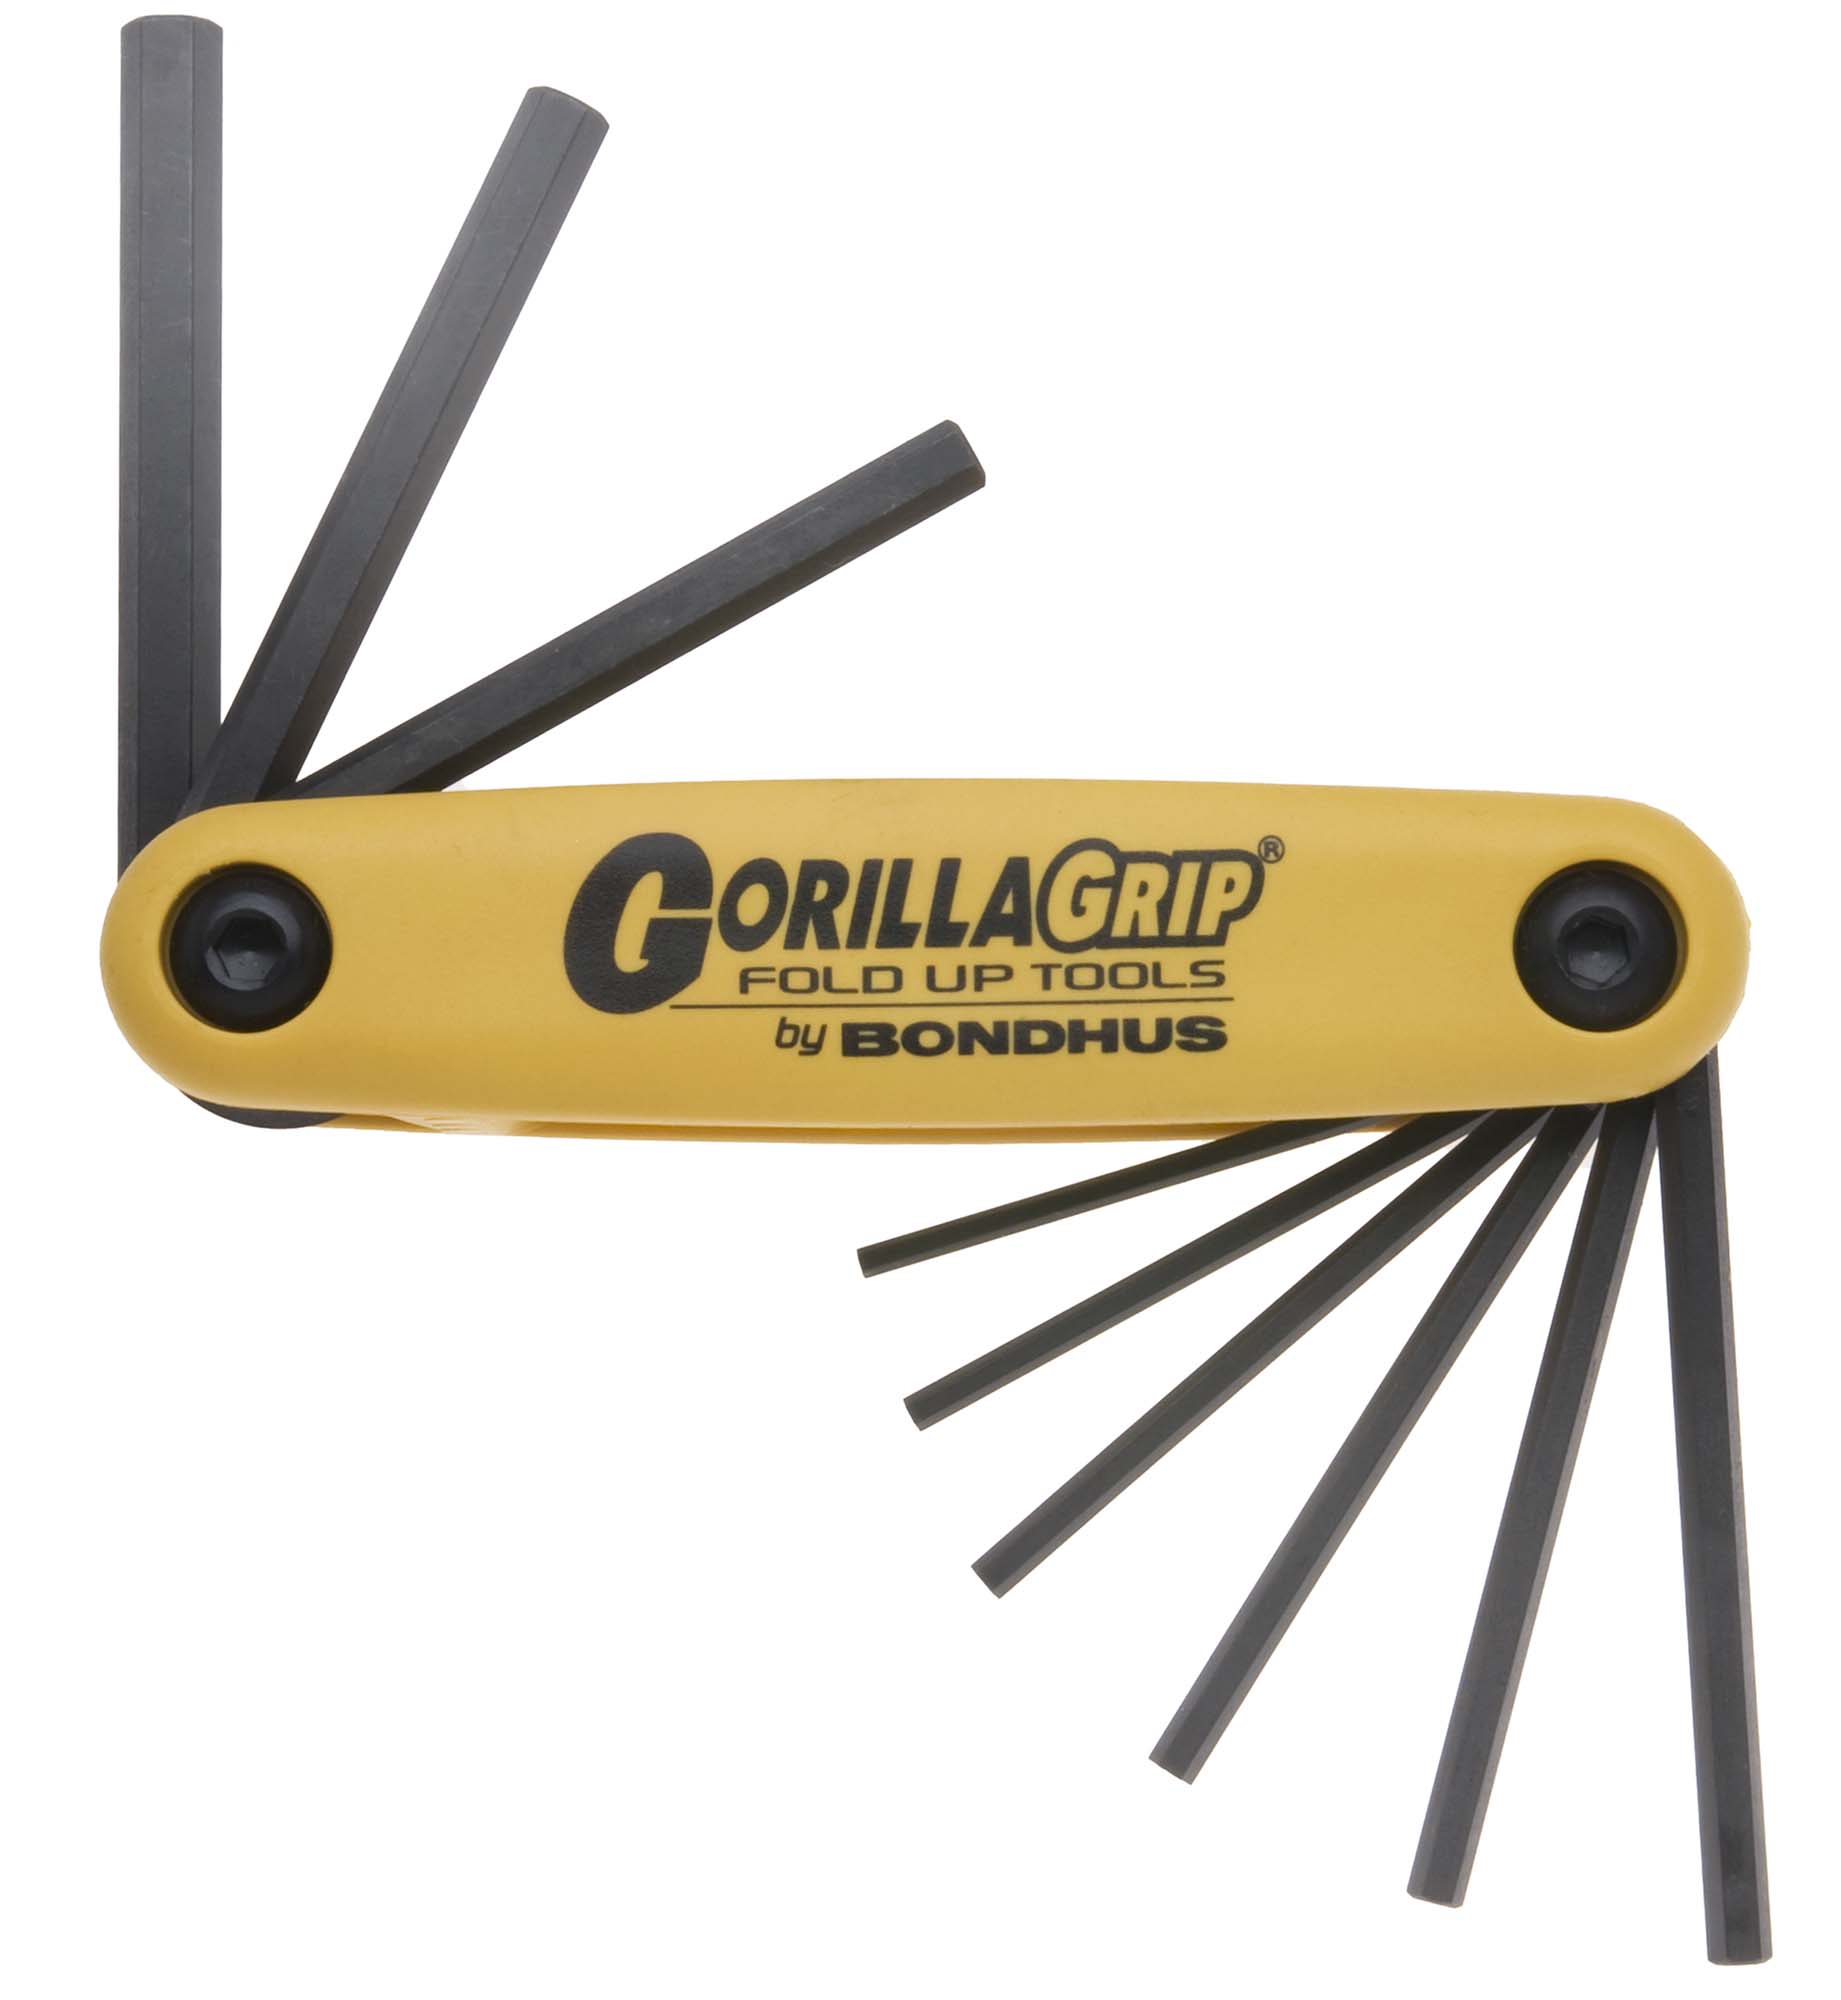 Bondhus 12585 3/16-3/8" Gorilla Grip Fold Up Hex Key Set